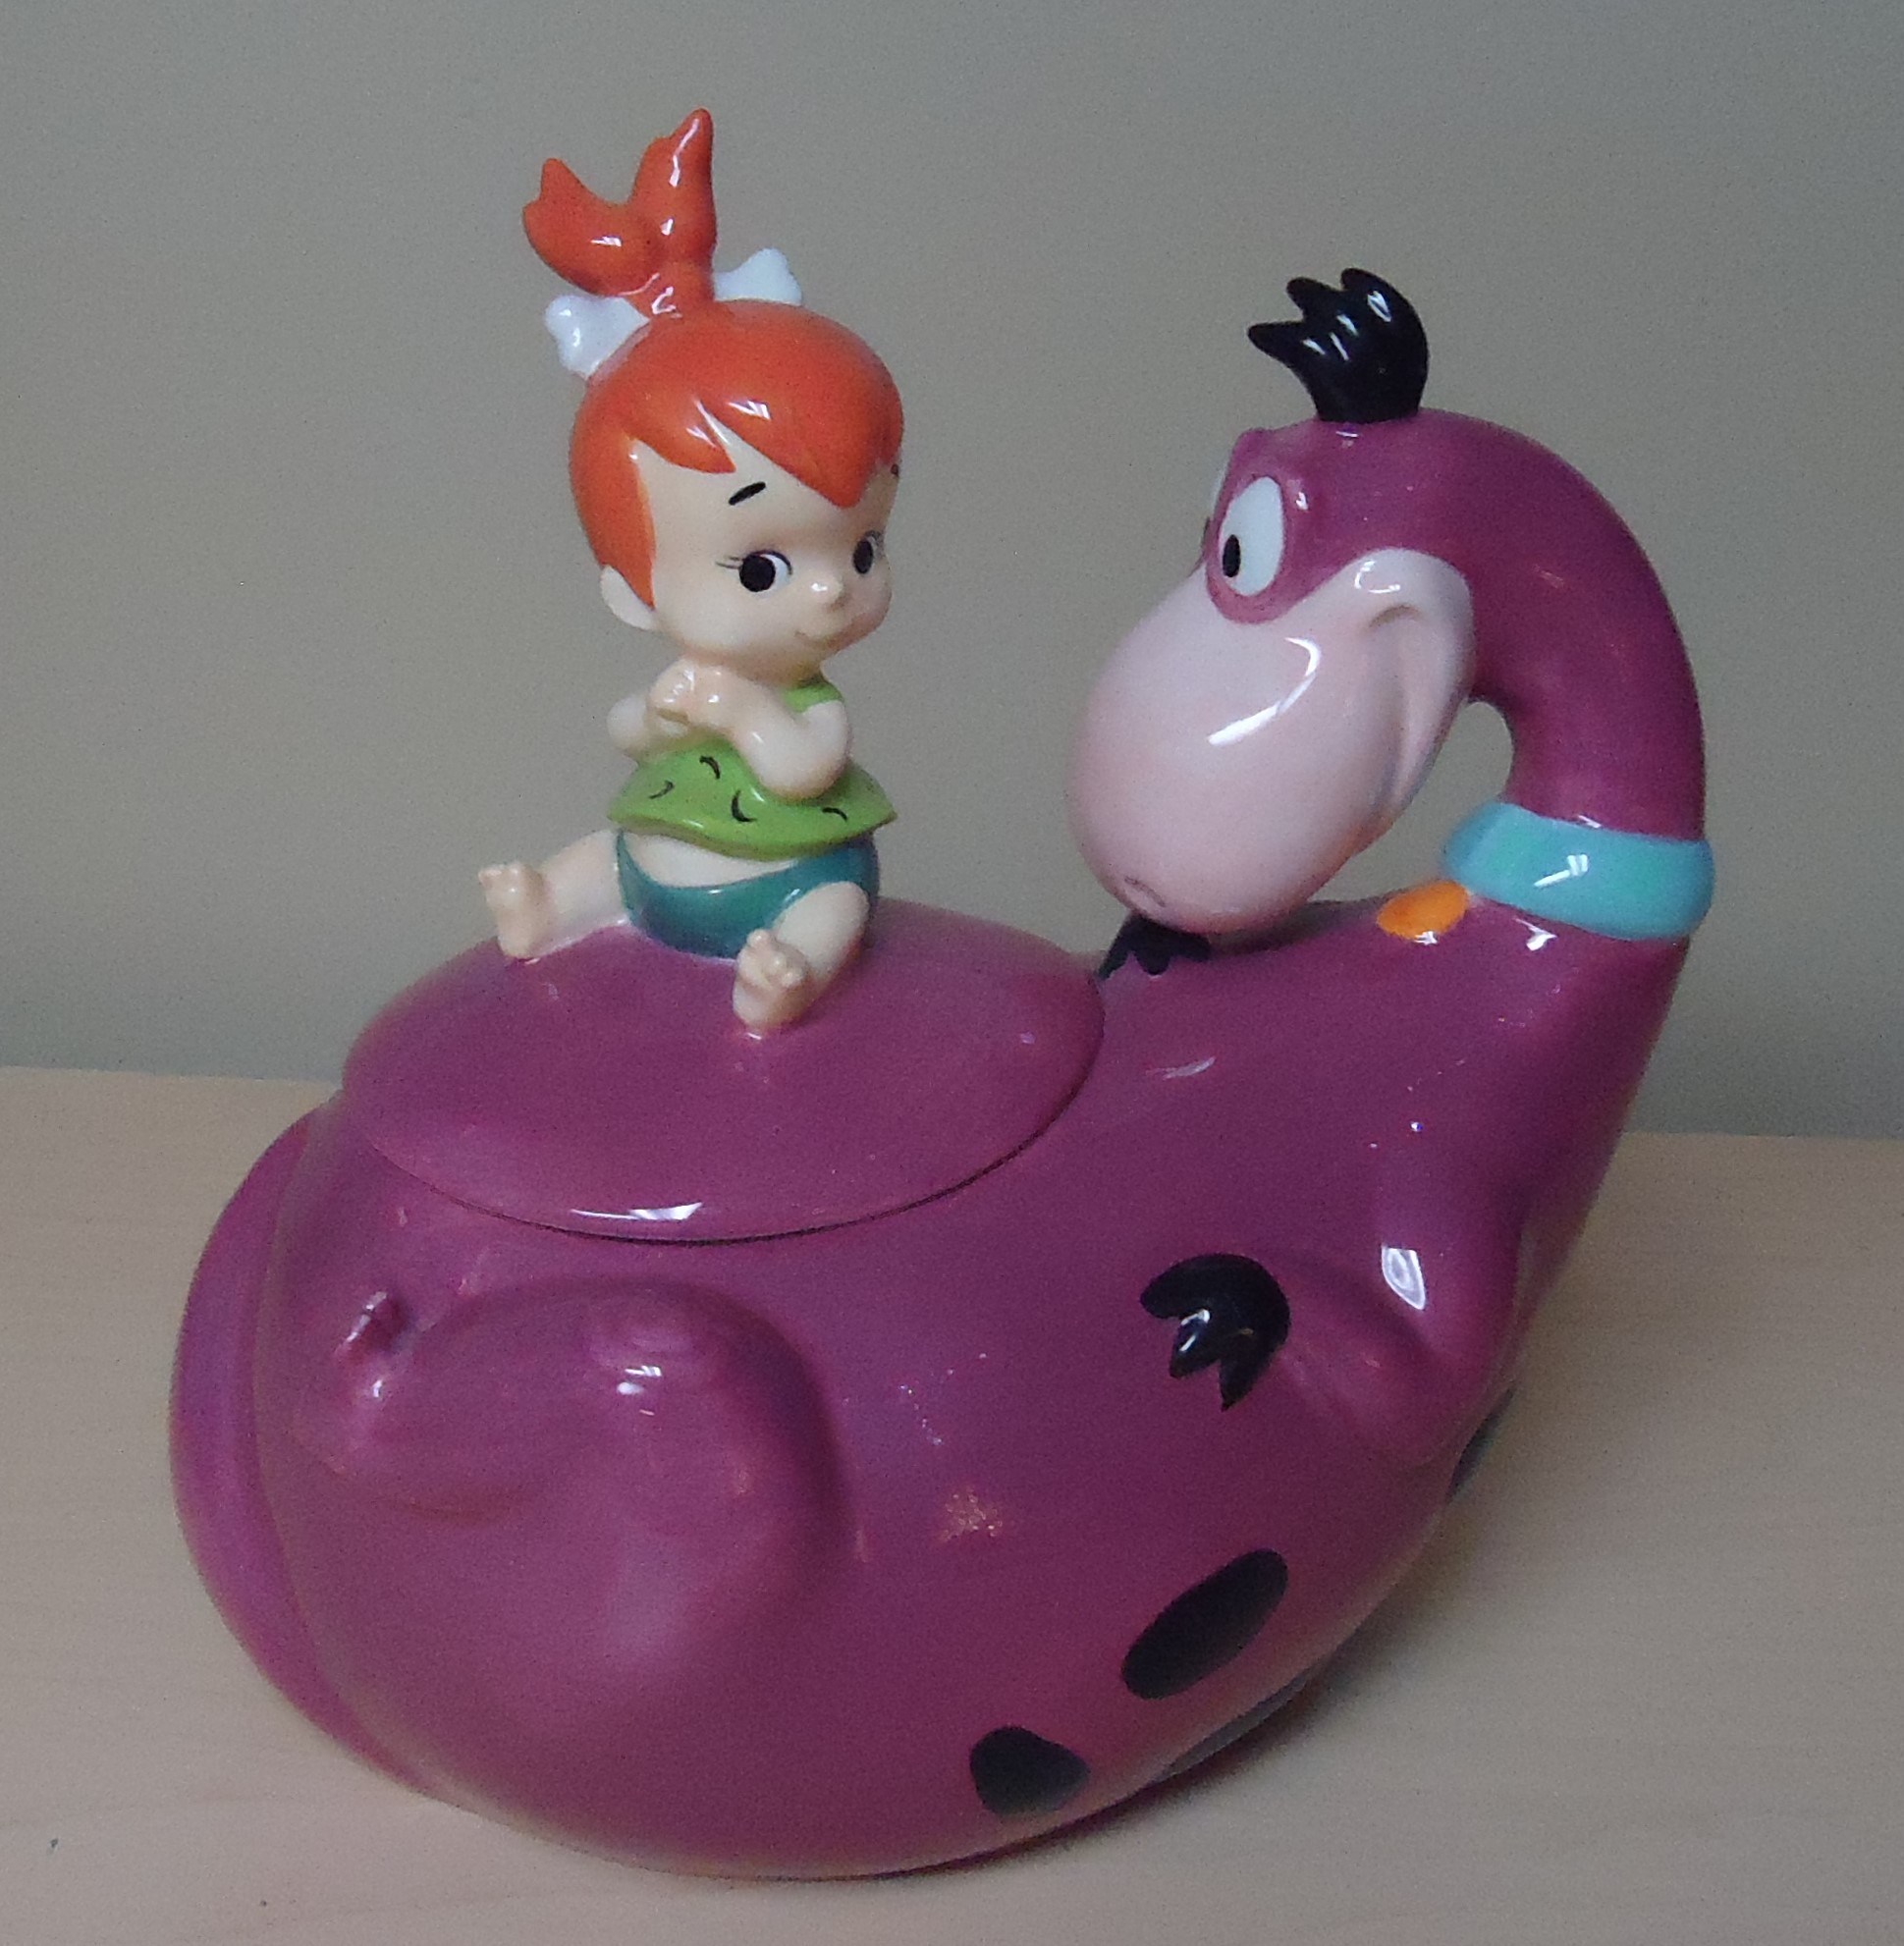 (21) "Flintstones" Dino & Pebbles
Cookie Jar
$55.00